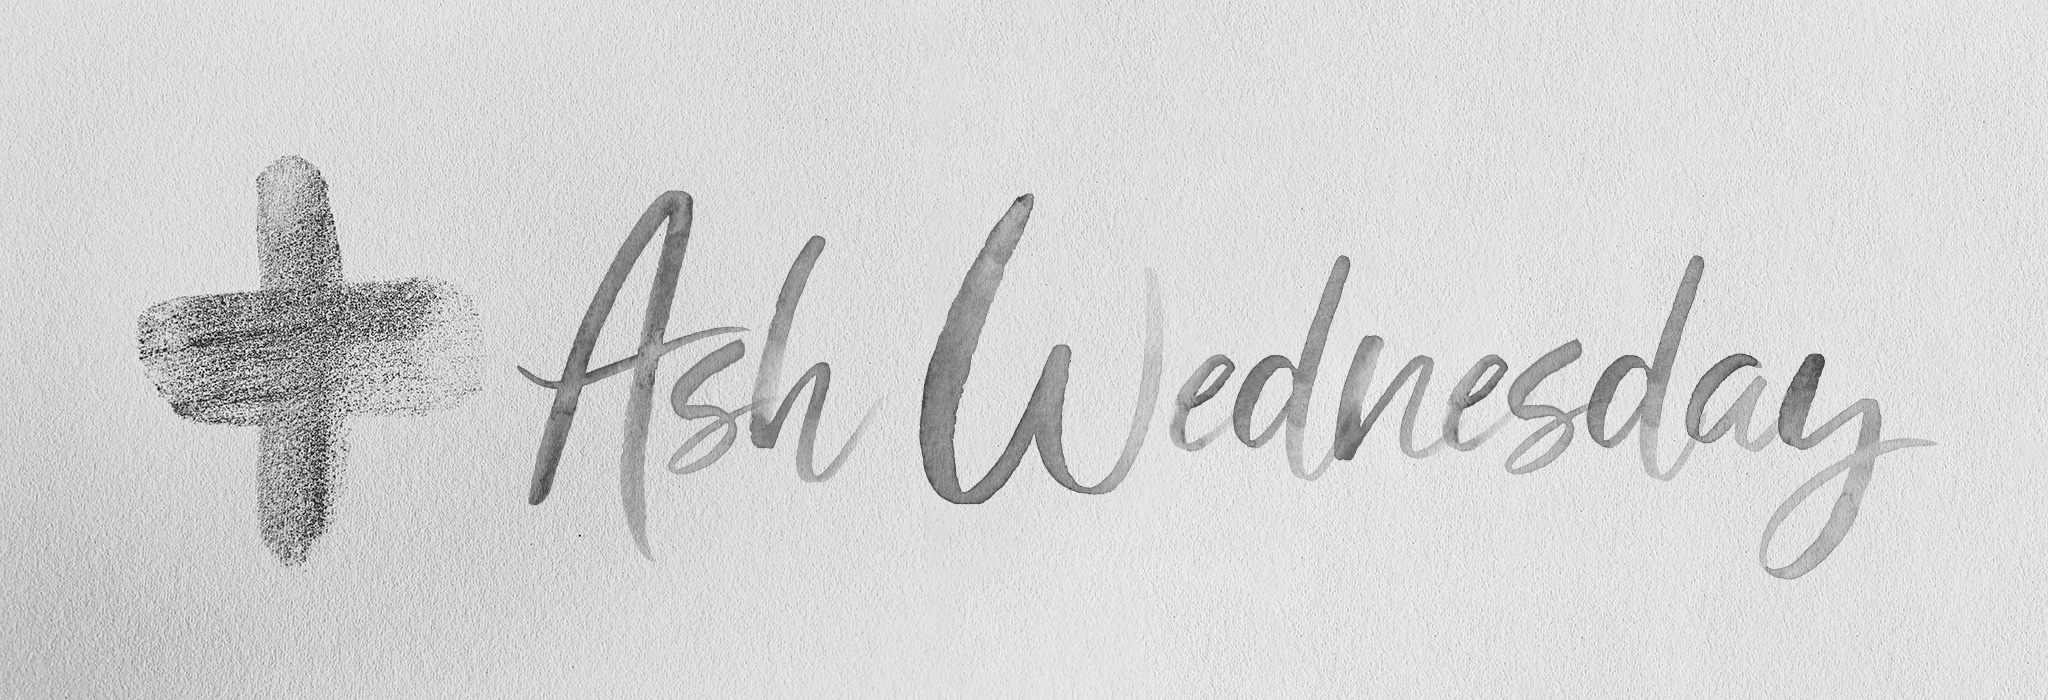 ash-wednesday-top